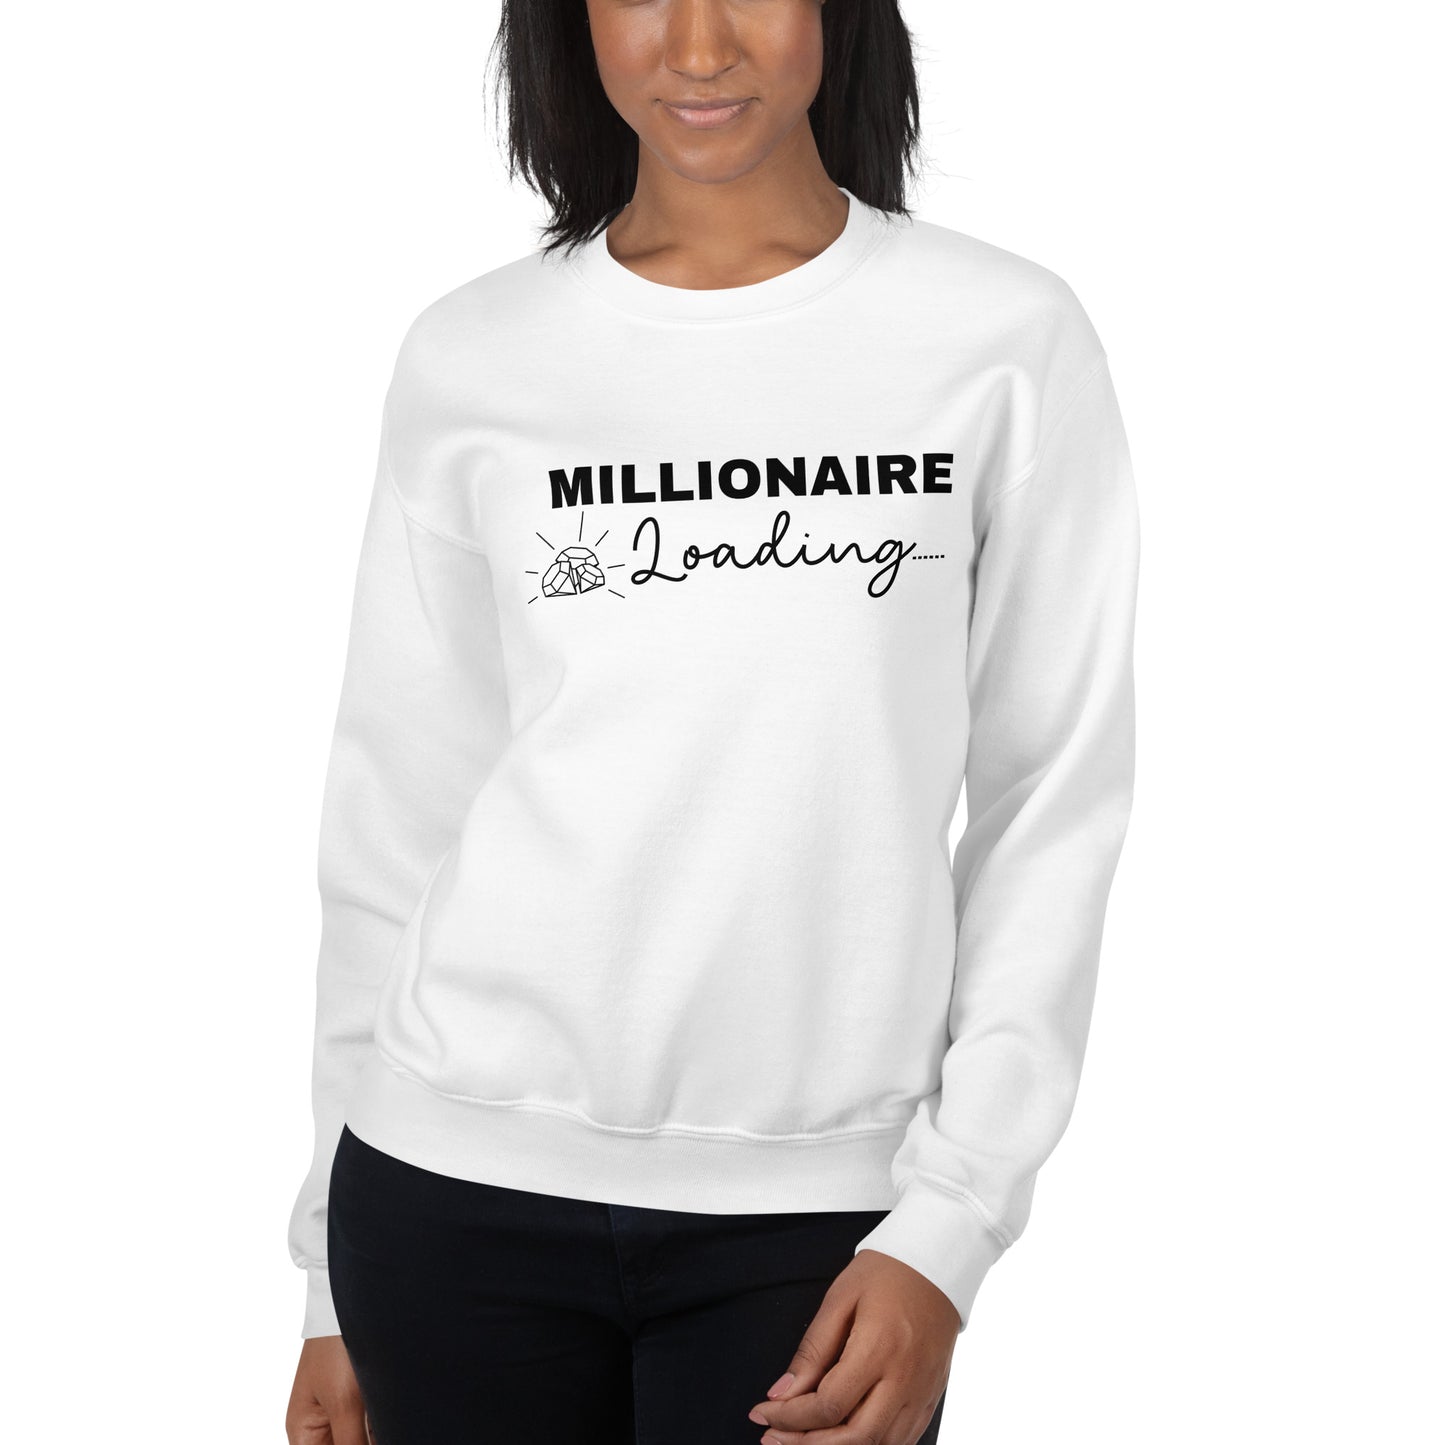 "Millionaire Loading" Sweatshirt